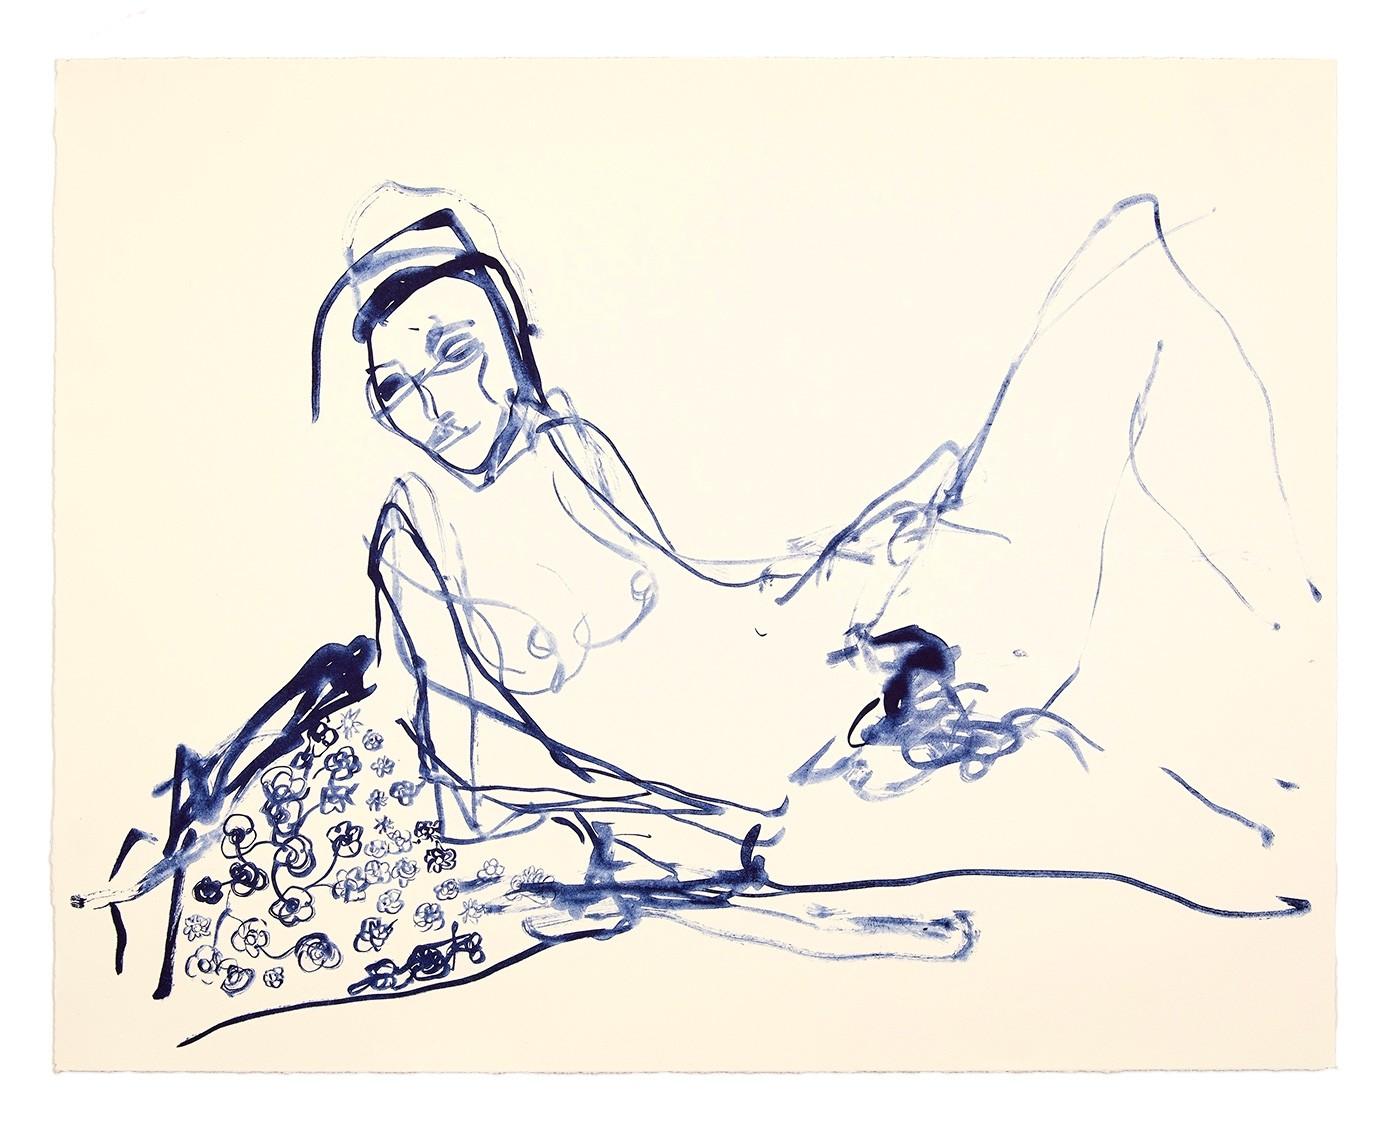 Tracey Emin Nude Print - I loved my Innocence